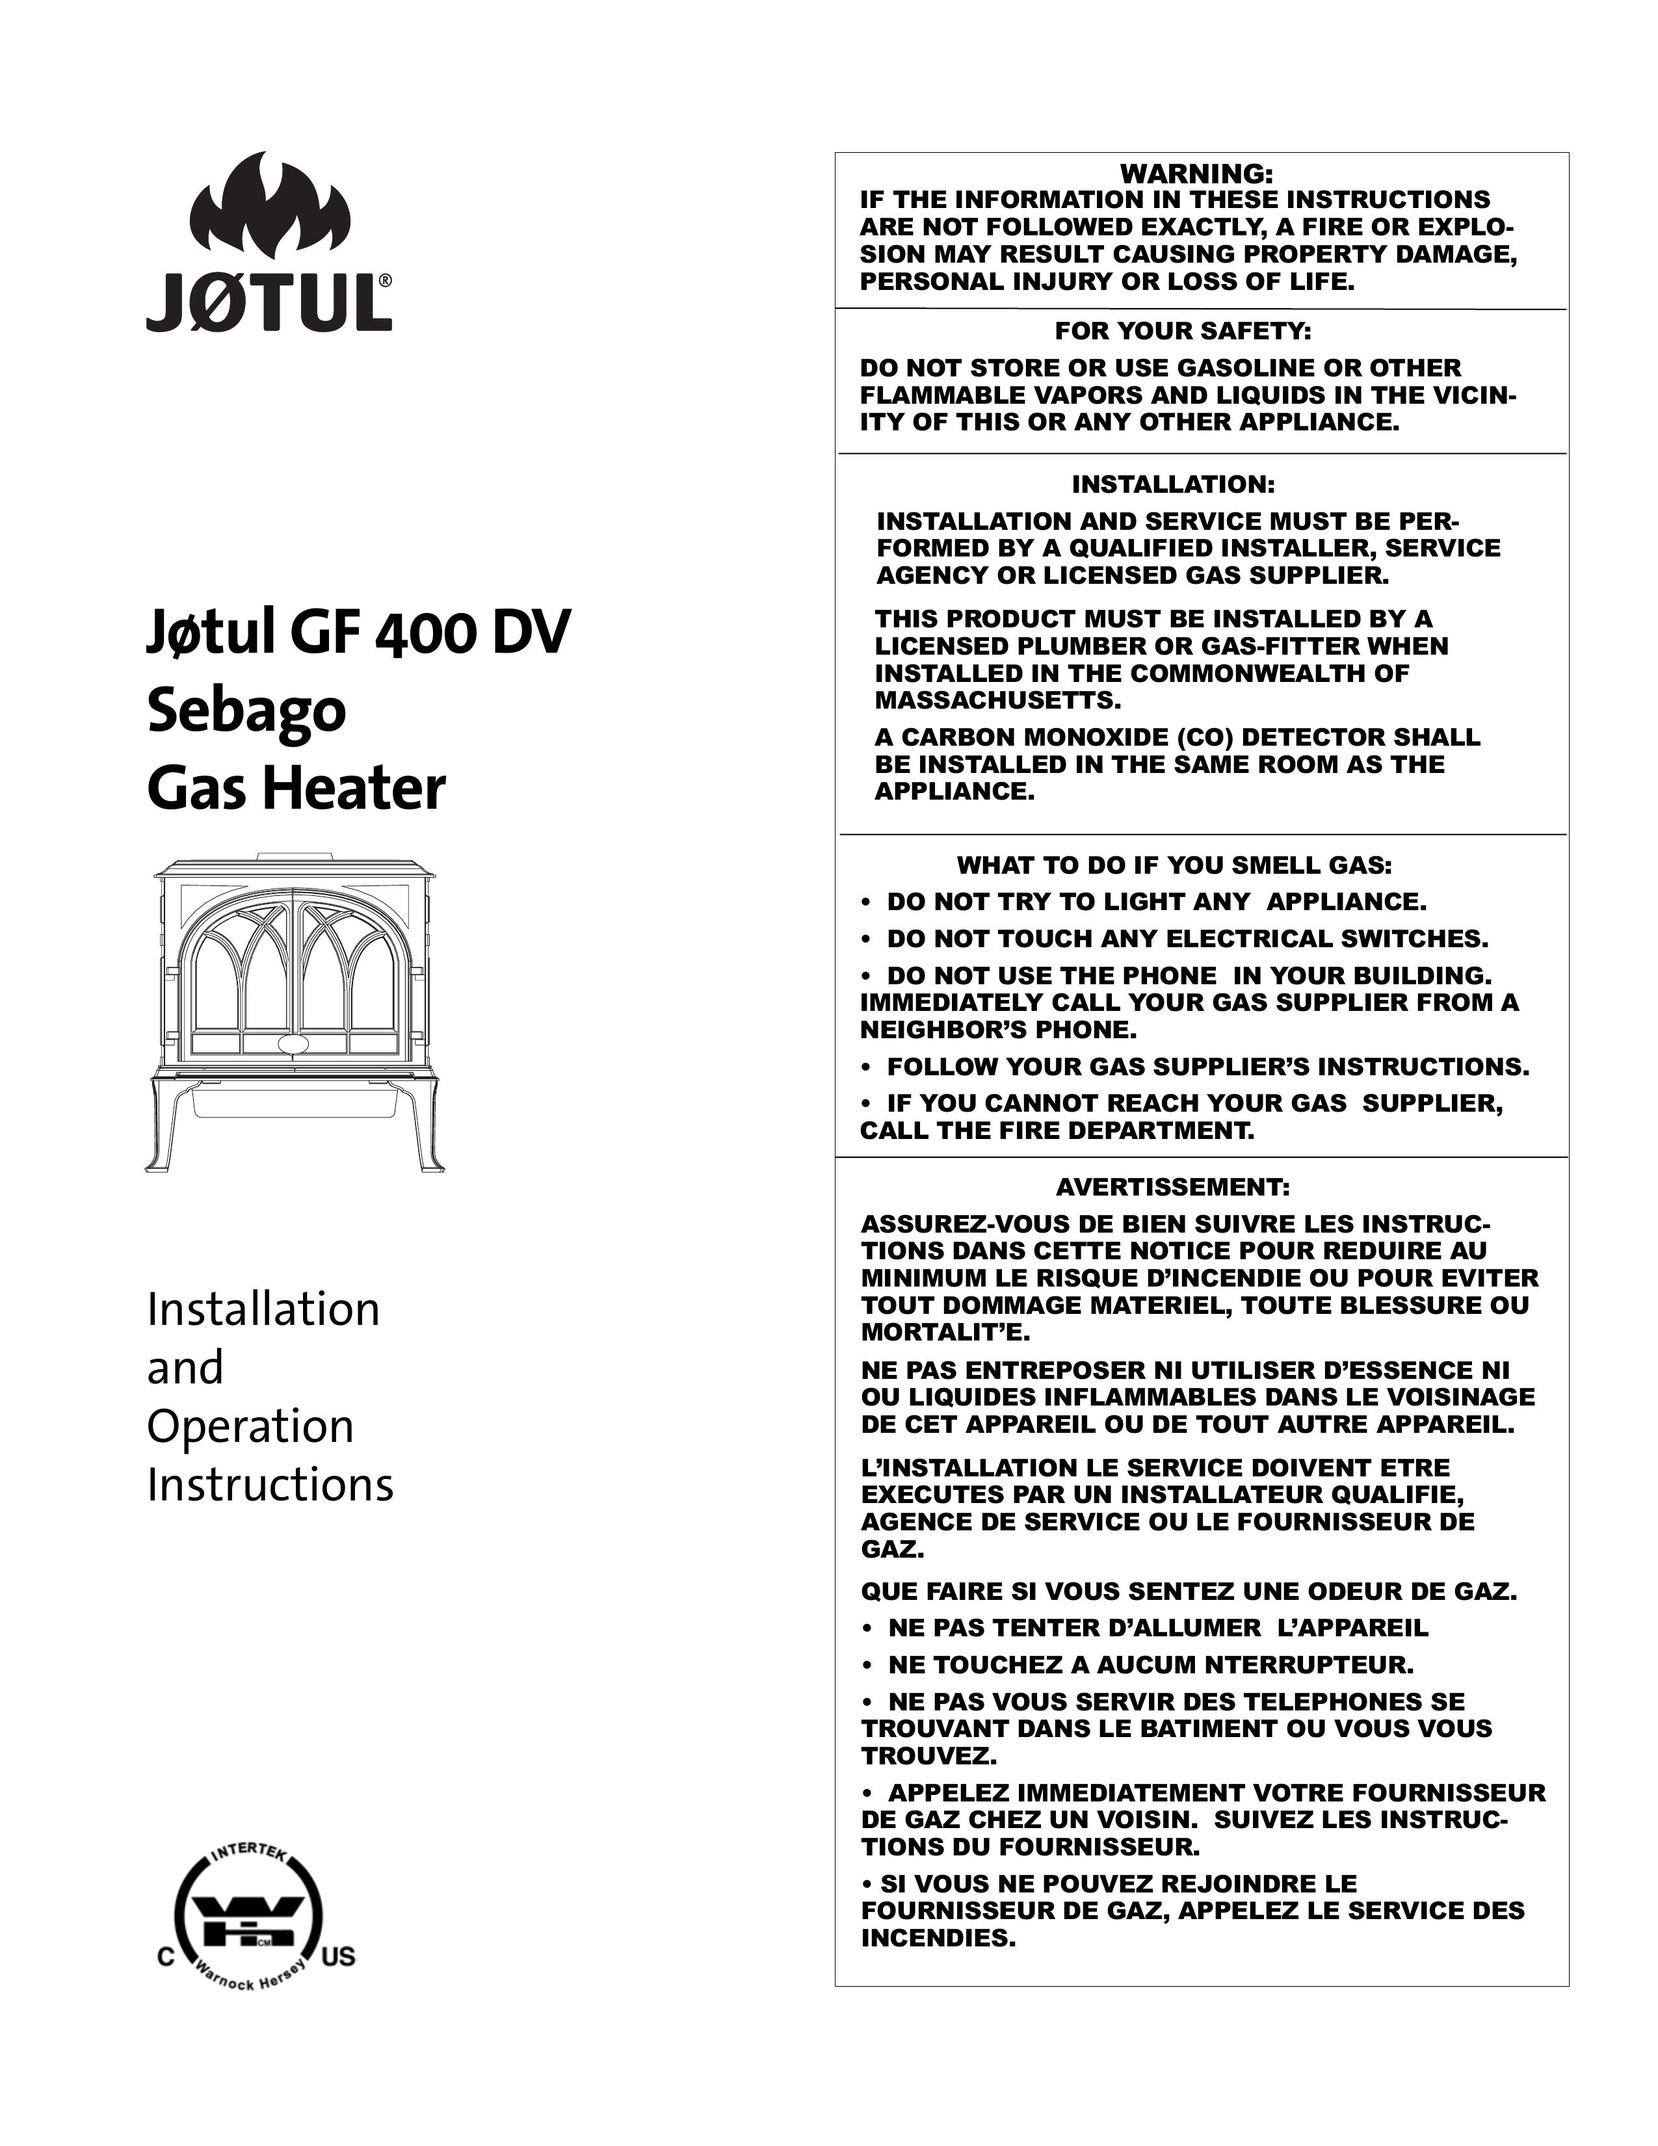 Jotul GF 400 DV Electric Heater User Manual